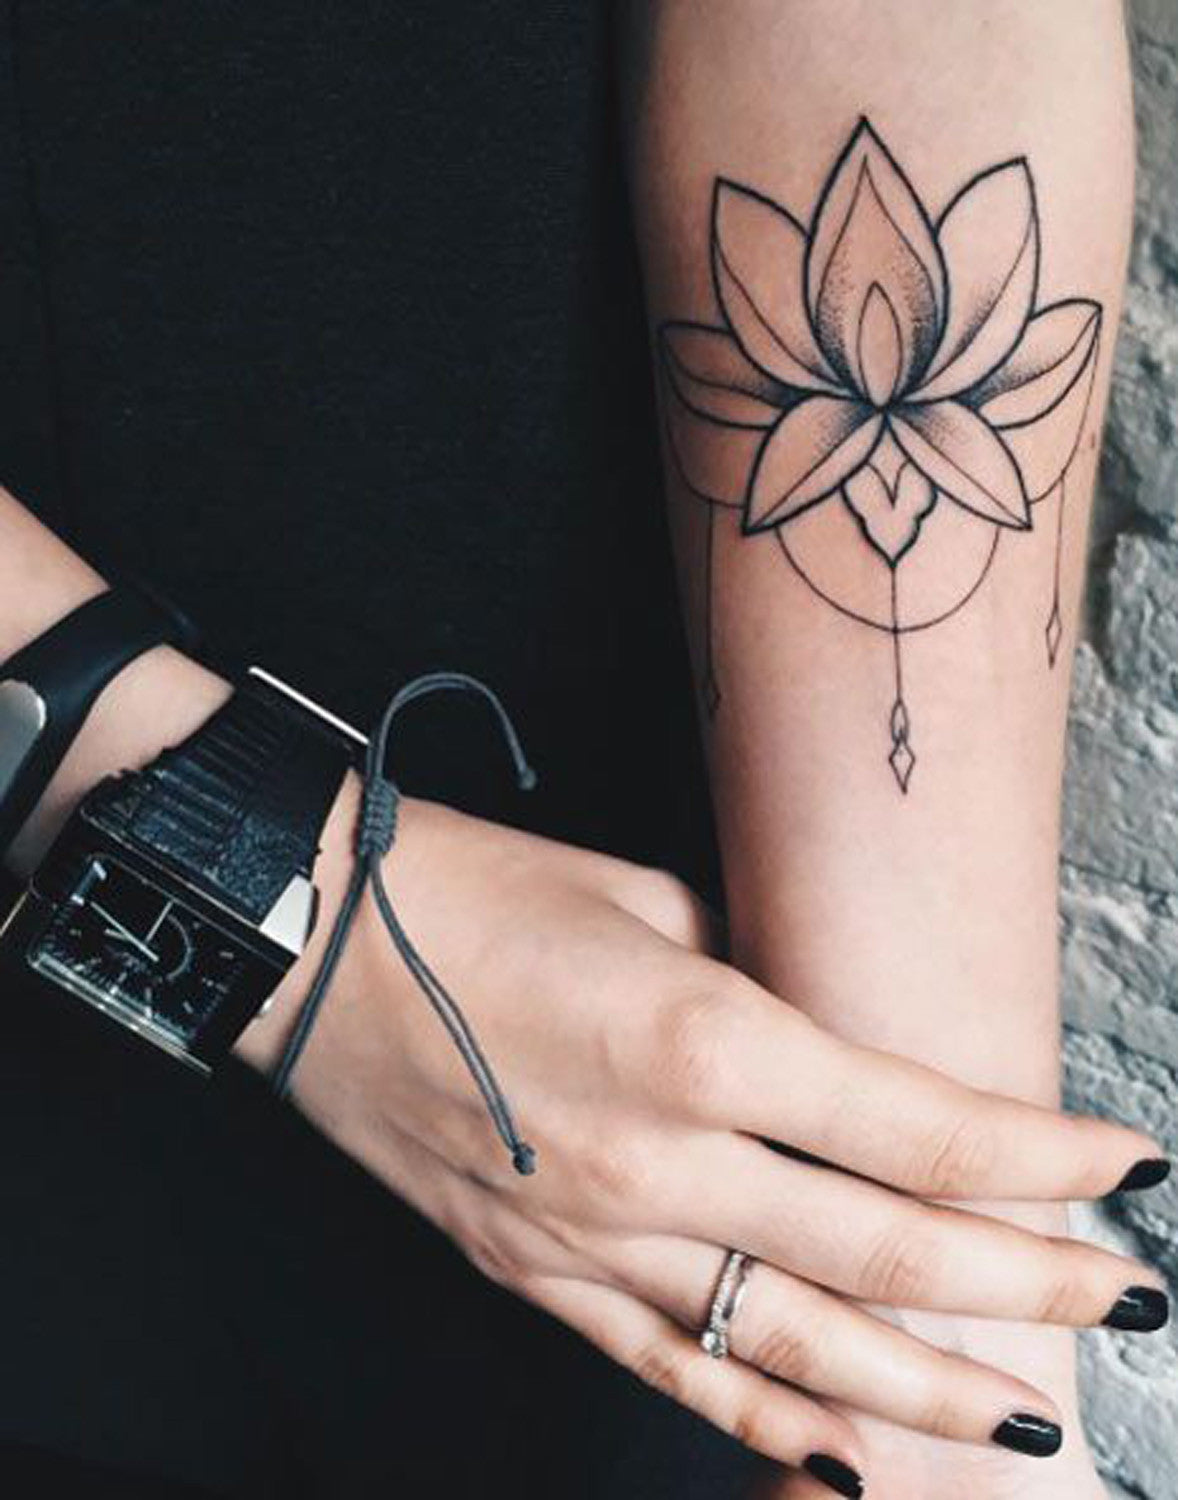 Lotus Flower Wrist Tattoo Ideas for Women - Black Chandelier Lace Arm Tat MyBodiArt.com